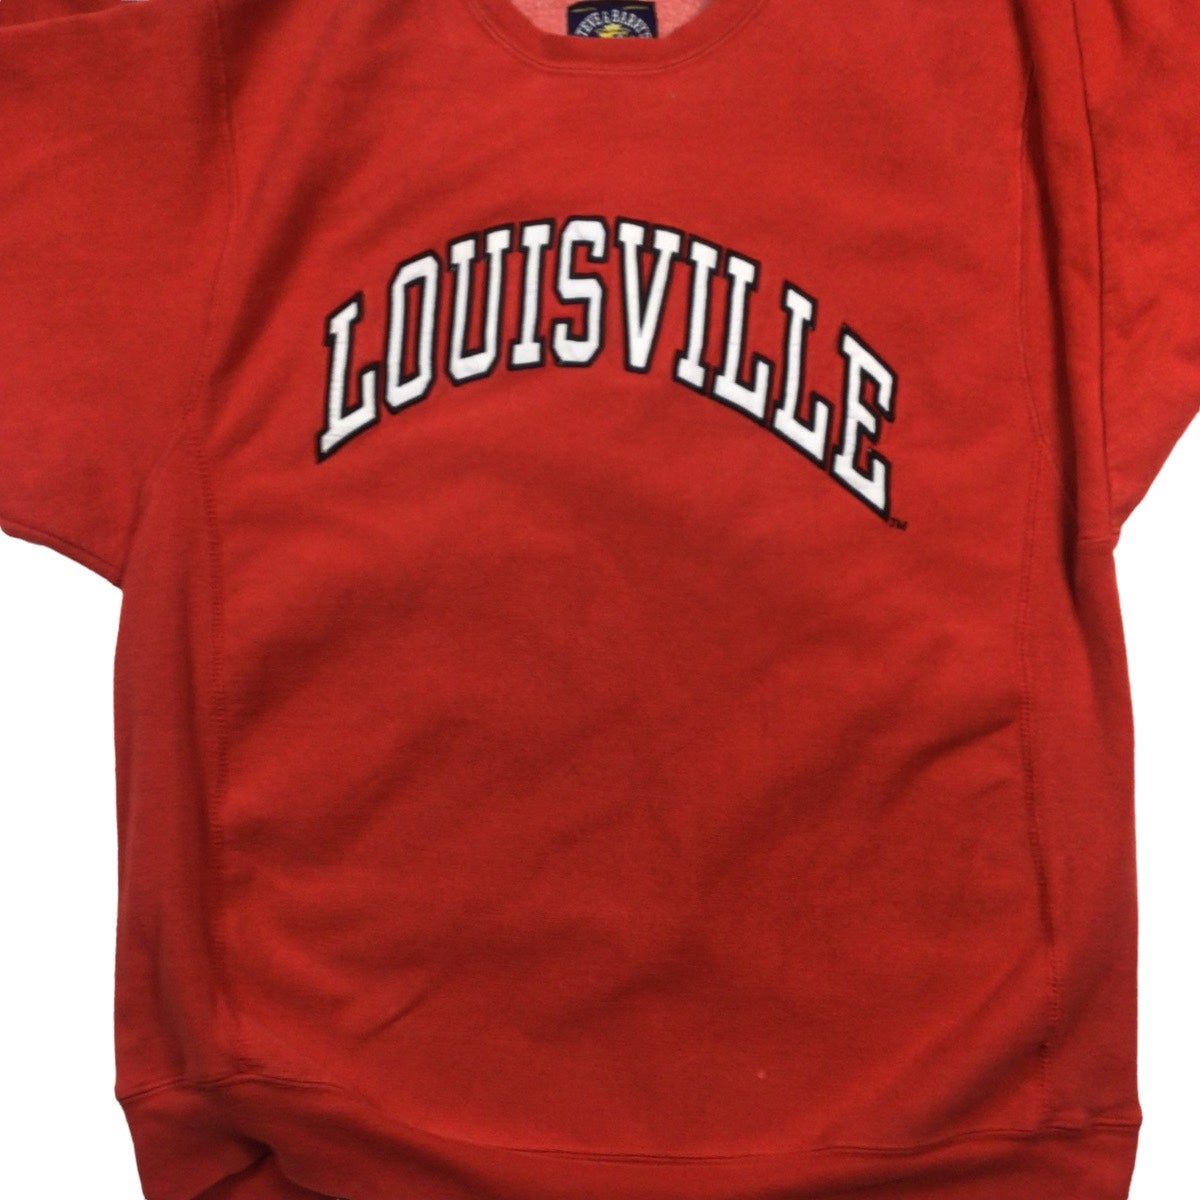 University of Louisville Reverse Weave Crewneck Sweatshirt